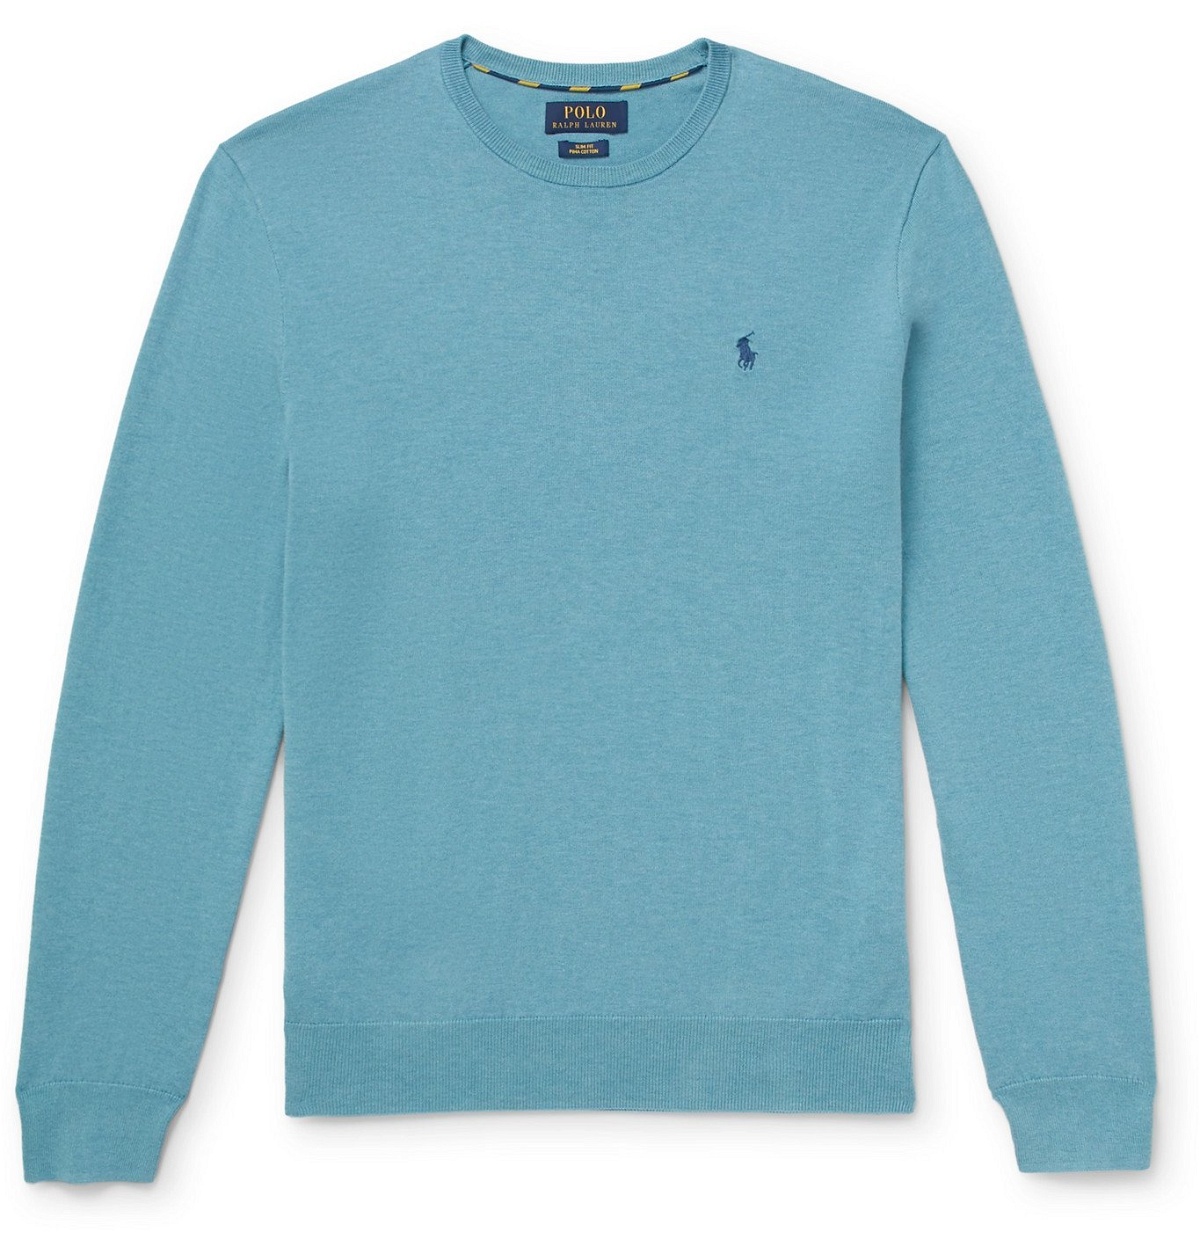 anmodning Uregelmæssigheder opladning Polo Ralph Lauren - Slim-Fit Pima Cotton Sweater - Blue Polo Ralph Lauren